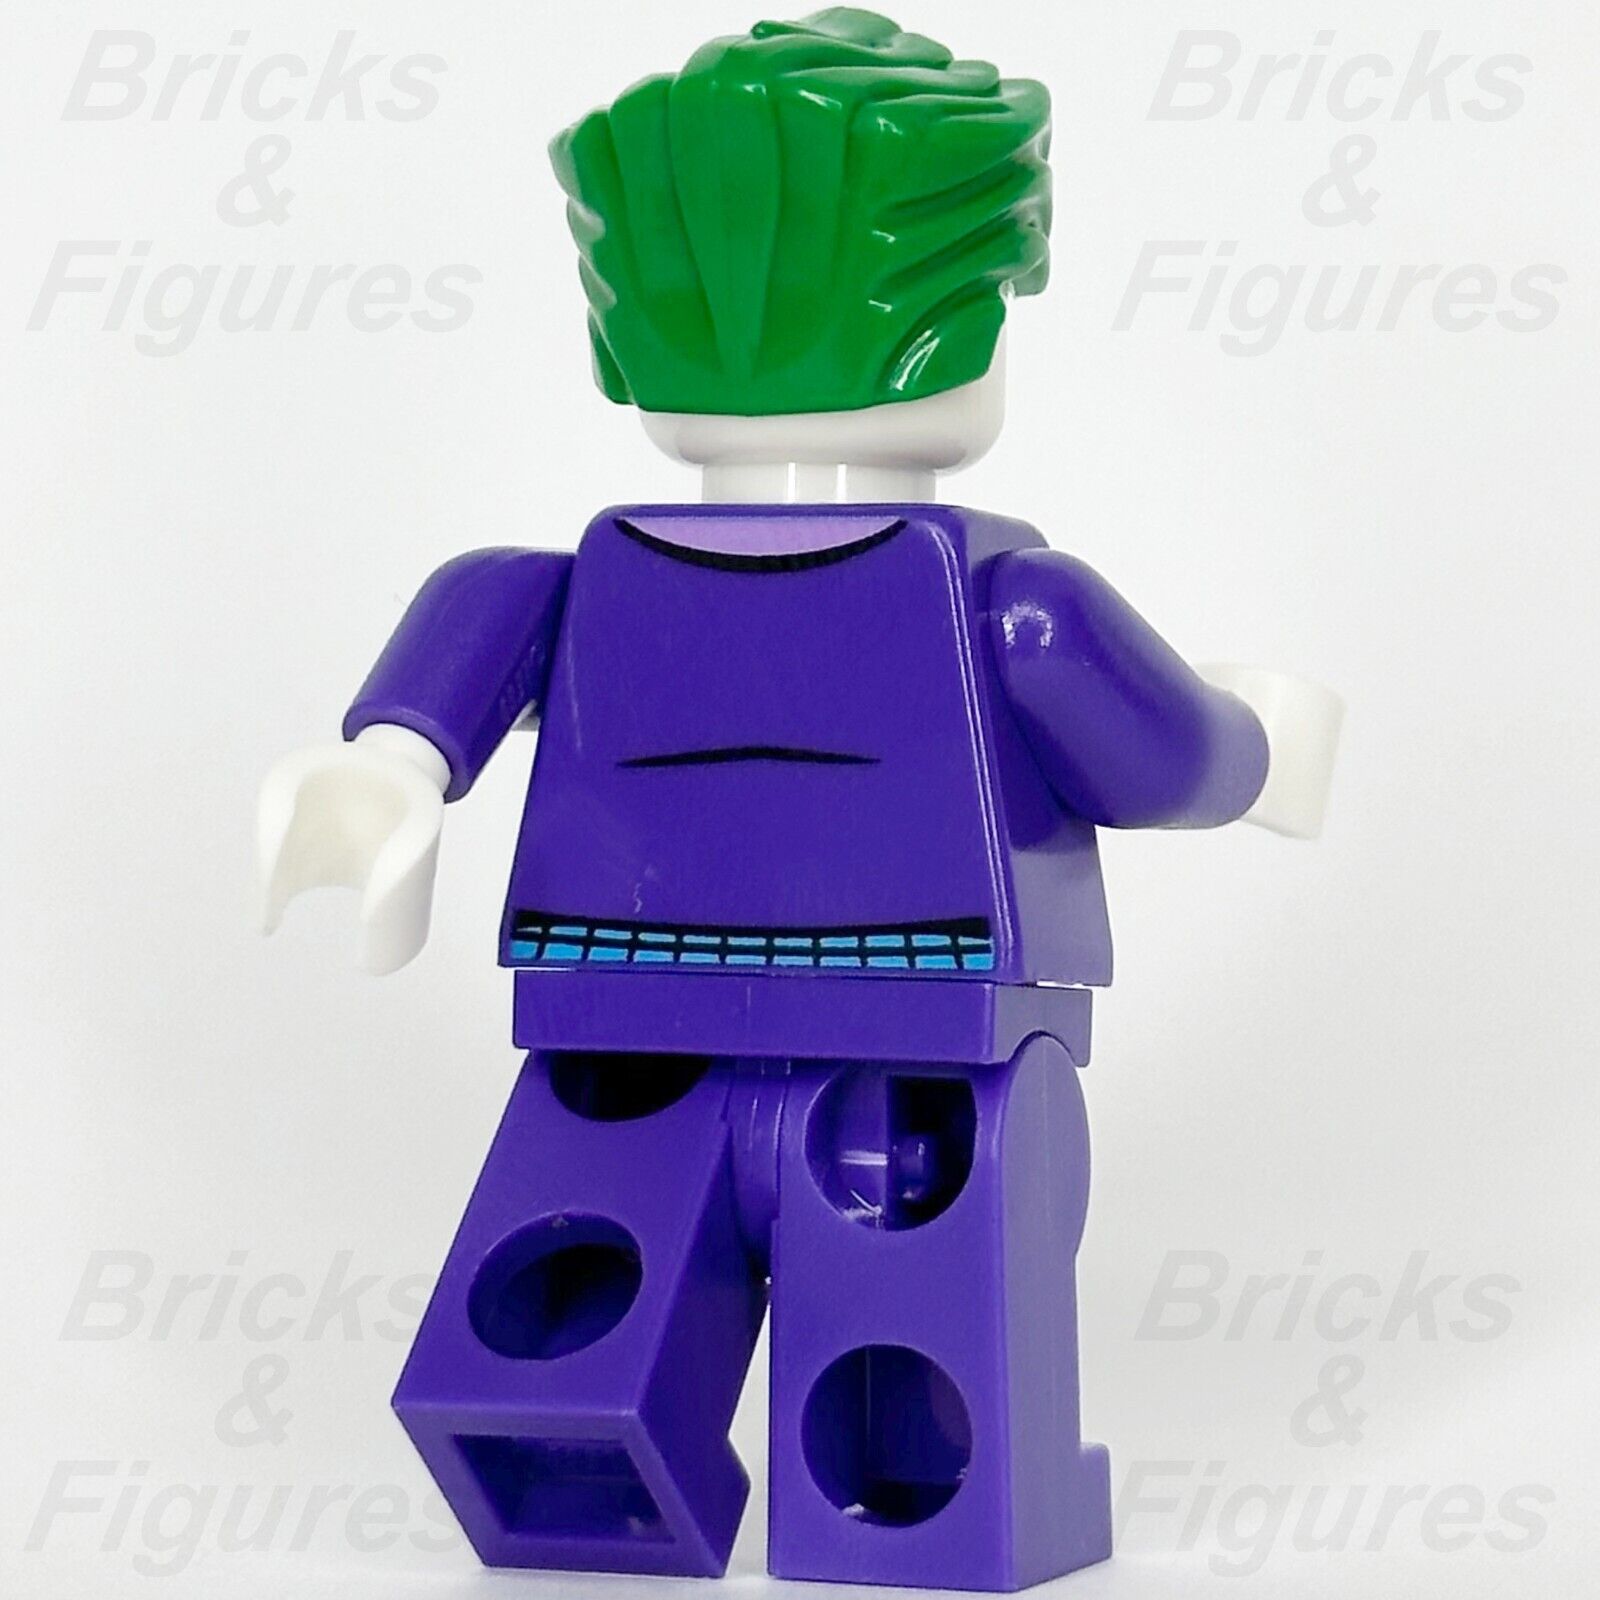 LEGO Super Heroes The Joker Minifigure Batman 2 DC 10753 sh515 Large Smile Hair